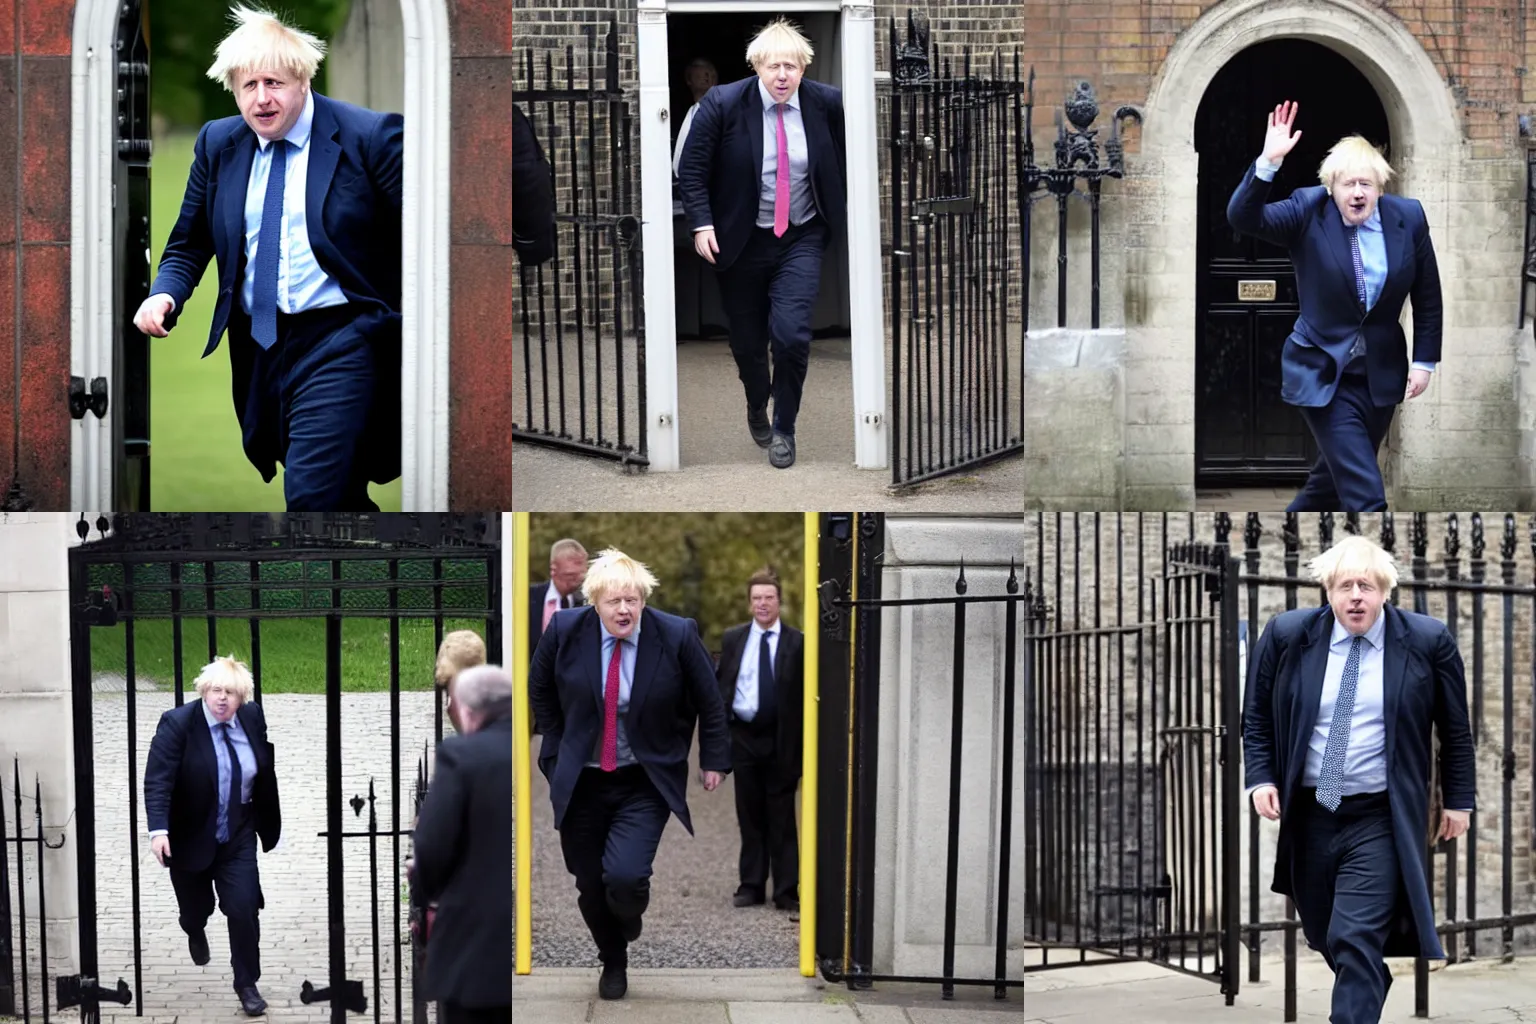 Prompt: Boris johnson entering the gates of mordor